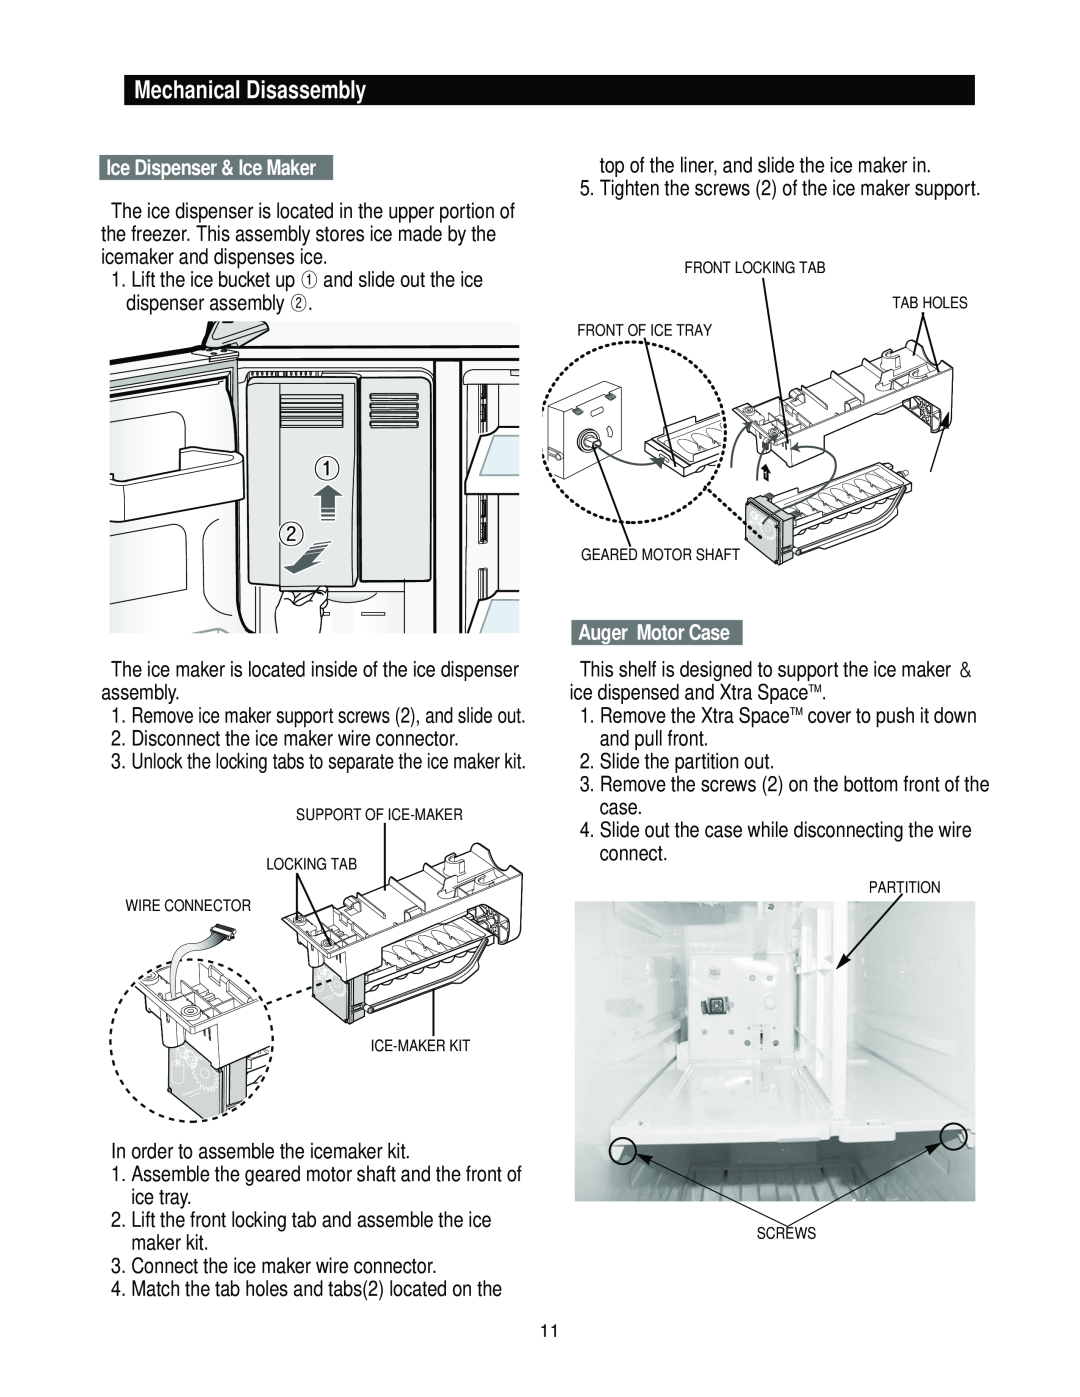 Samsung RS2*3* manual Ice Dispenser & Ice Maker, Auger Motor Case, Mechanical Disassembly 